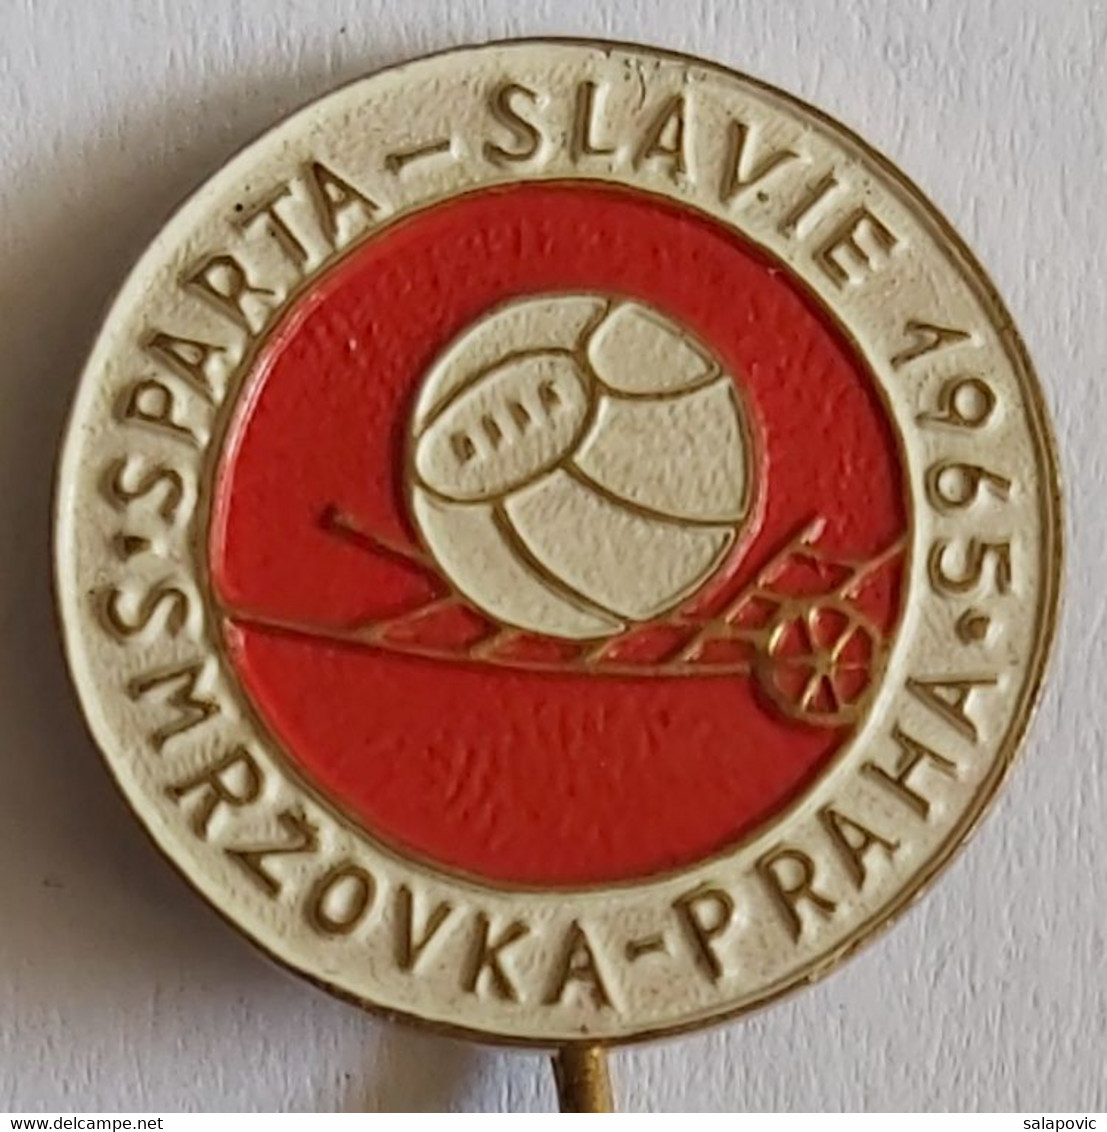 Sparta - Slavie 1965 Smržovka PRAHA Czech Republic  Football Soccer Club Fussball Calcio Futbol Futebol PINS BADGES A4/3 - Football